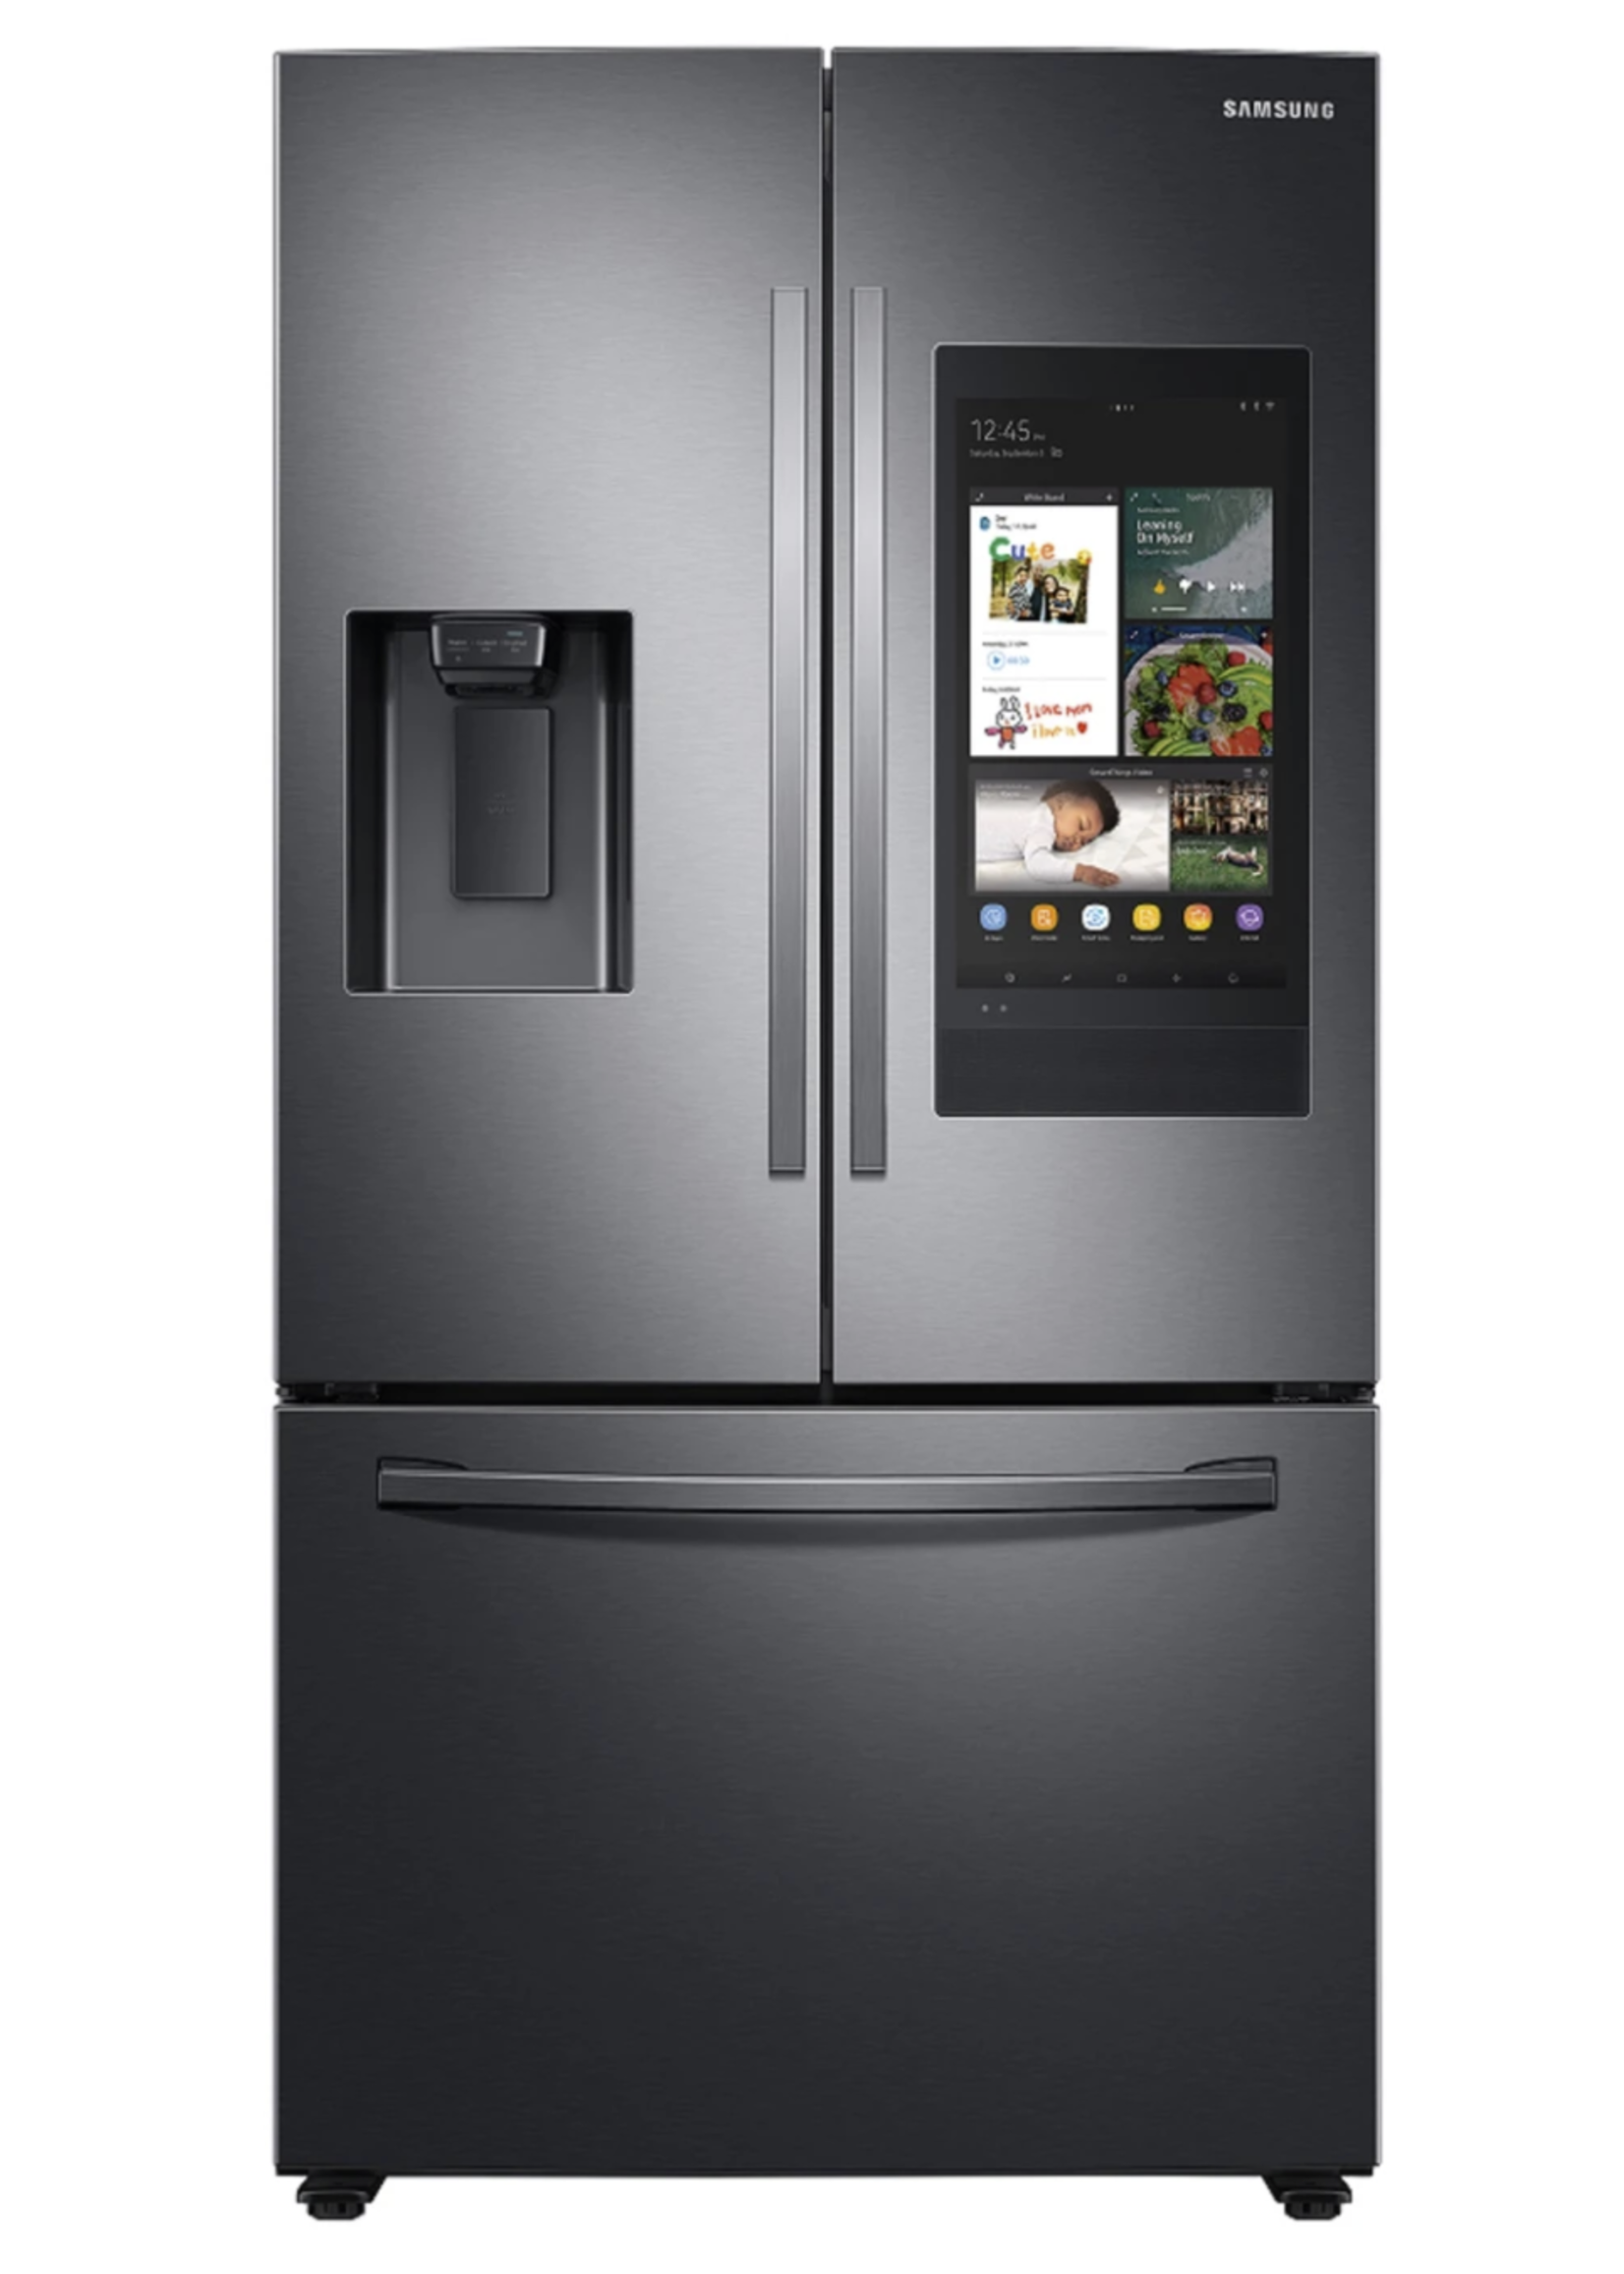 SAMSUNG Samsung 36 Inch Wide 26.5 Cu. Ft. with Family Hub rRefrigerator